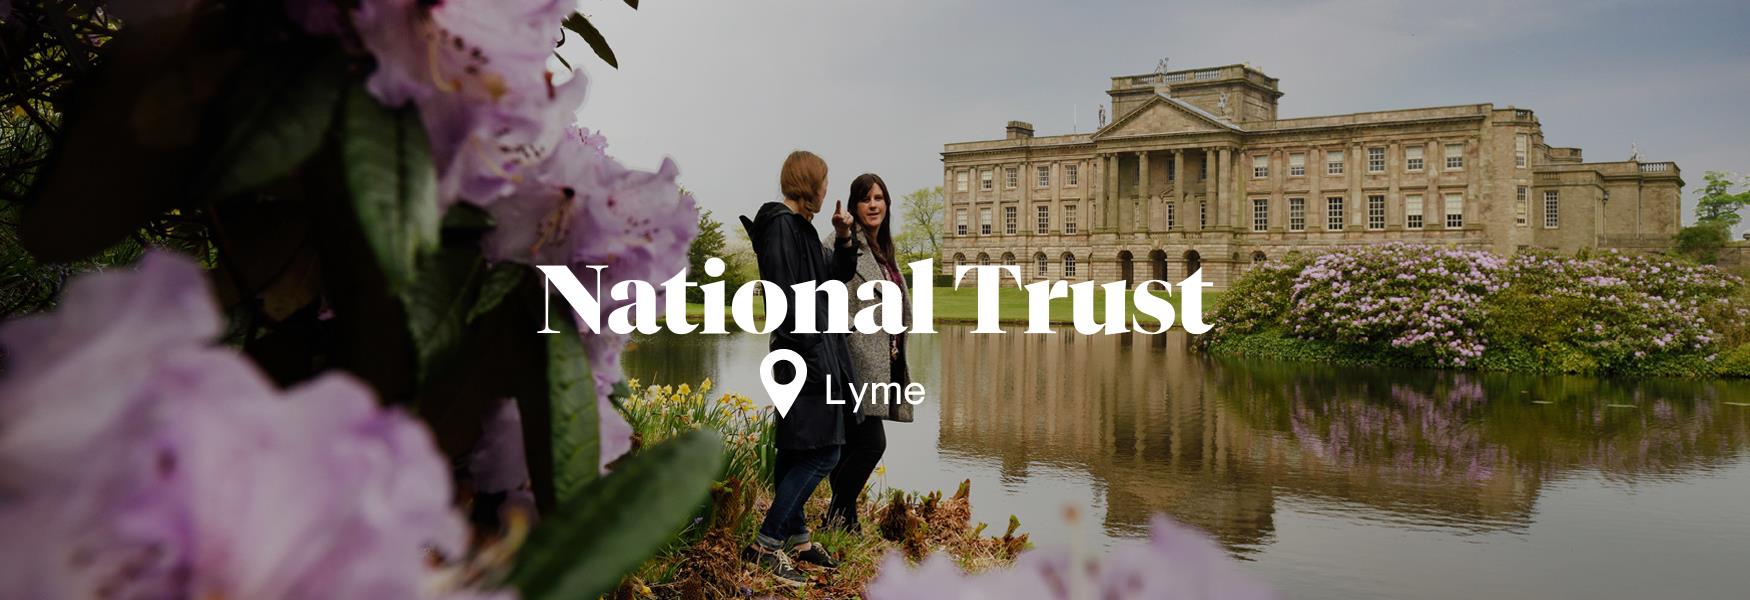 Lyme, National Trust